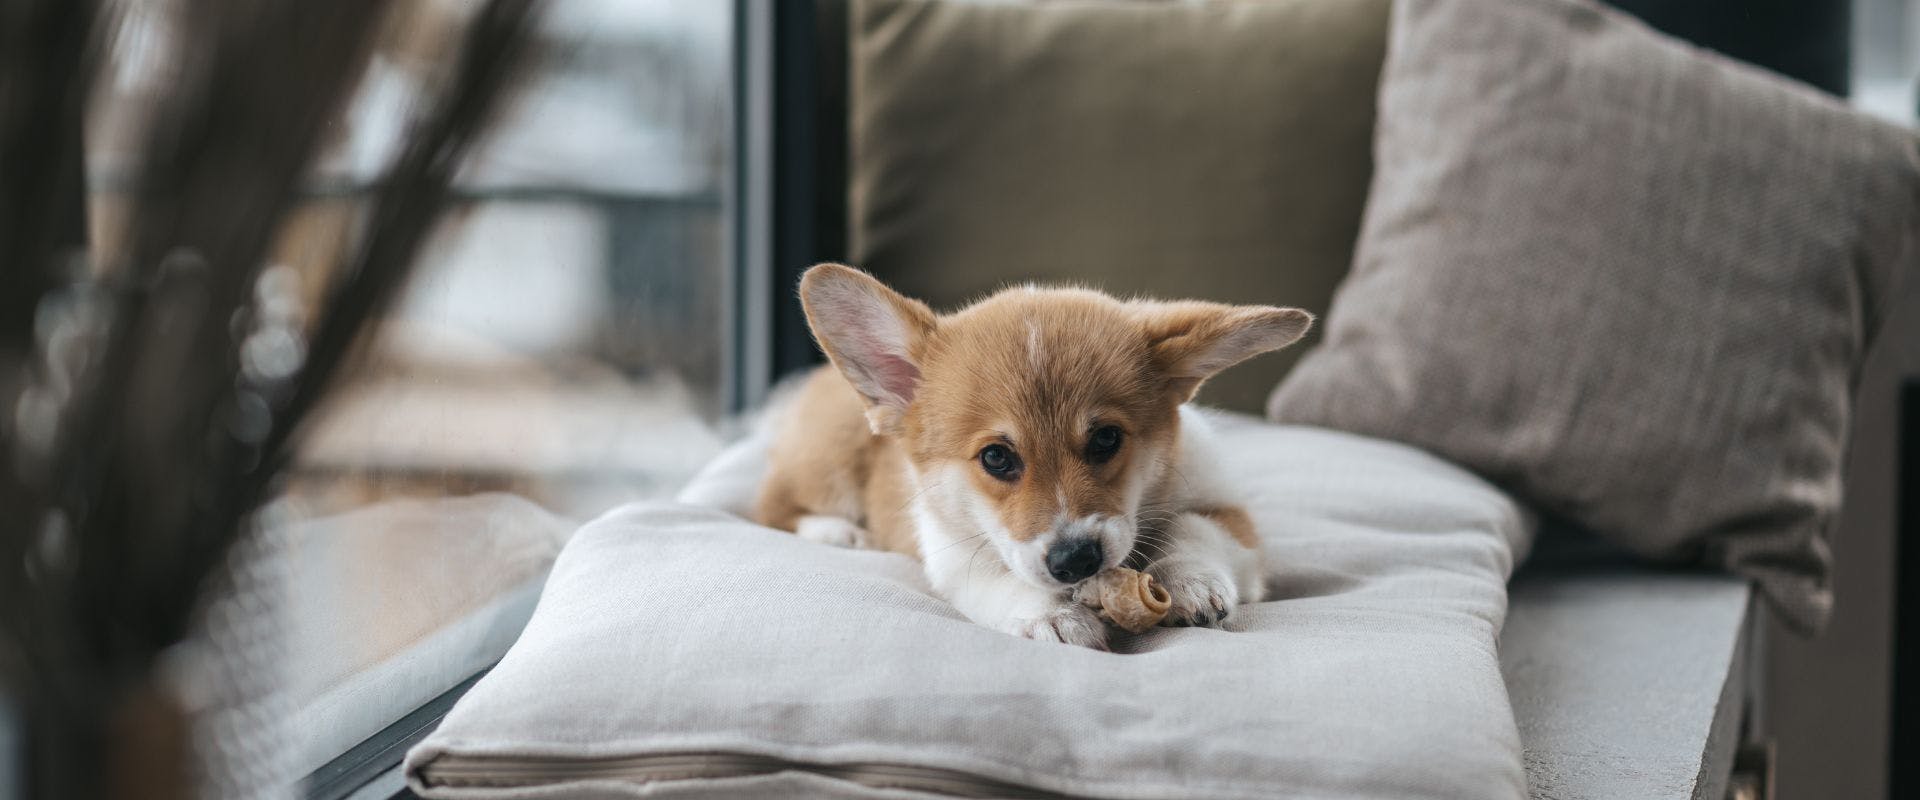 Corgi puppy eating a treat on a pillow